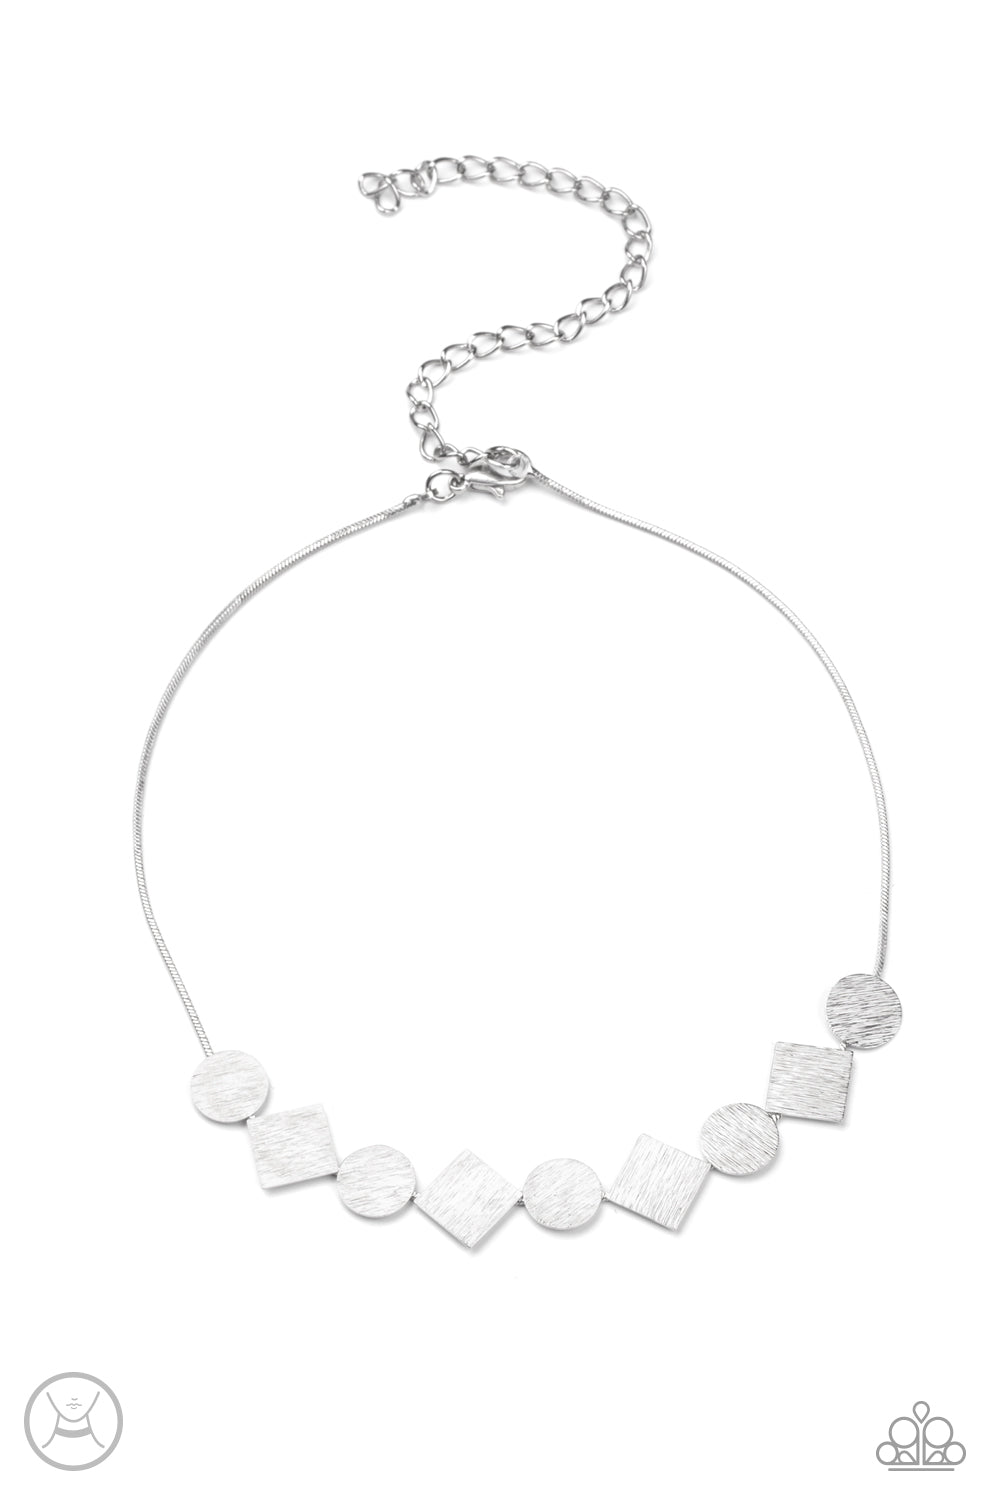 Don't Get Bent Out Of Shape - Silver Choker Necklace Set - Princess Glam Shop